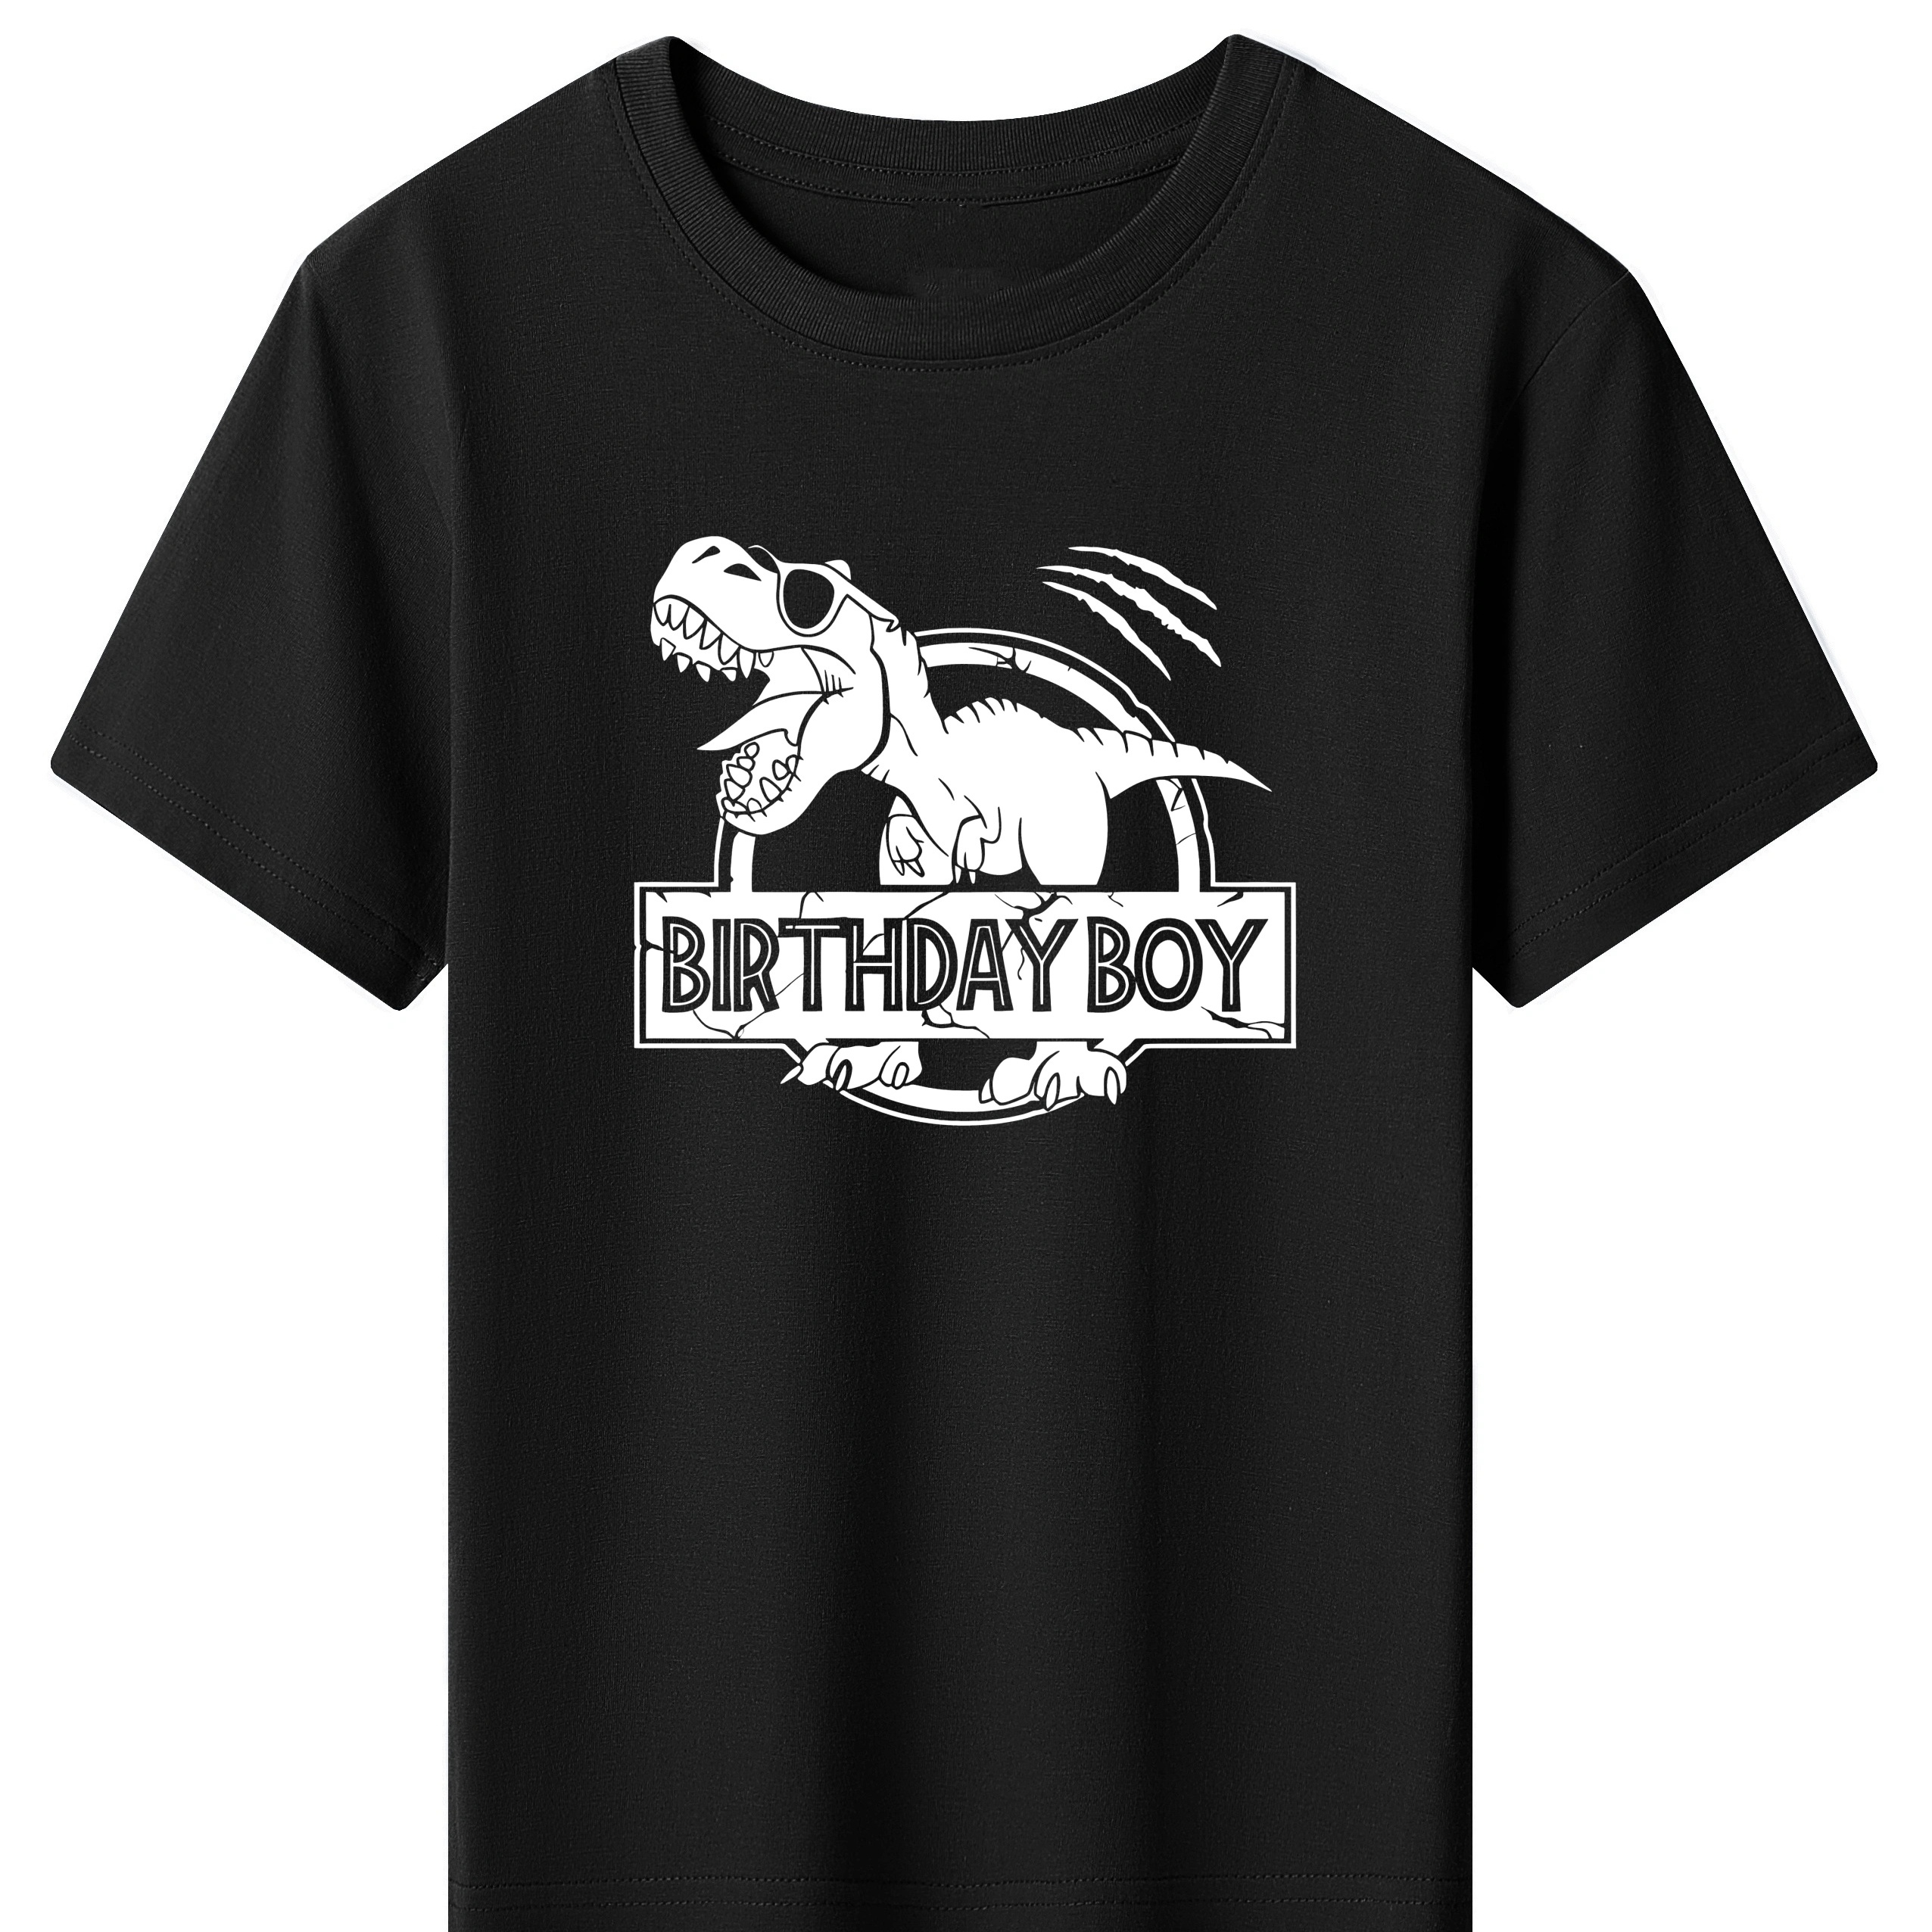 

Birthday Boy & Dinosaur Graphic Print, Boys' Casual & Comfy Short Sleeve Crew Neck Cotton Tee For Spring & Summer, Boys' Clothes